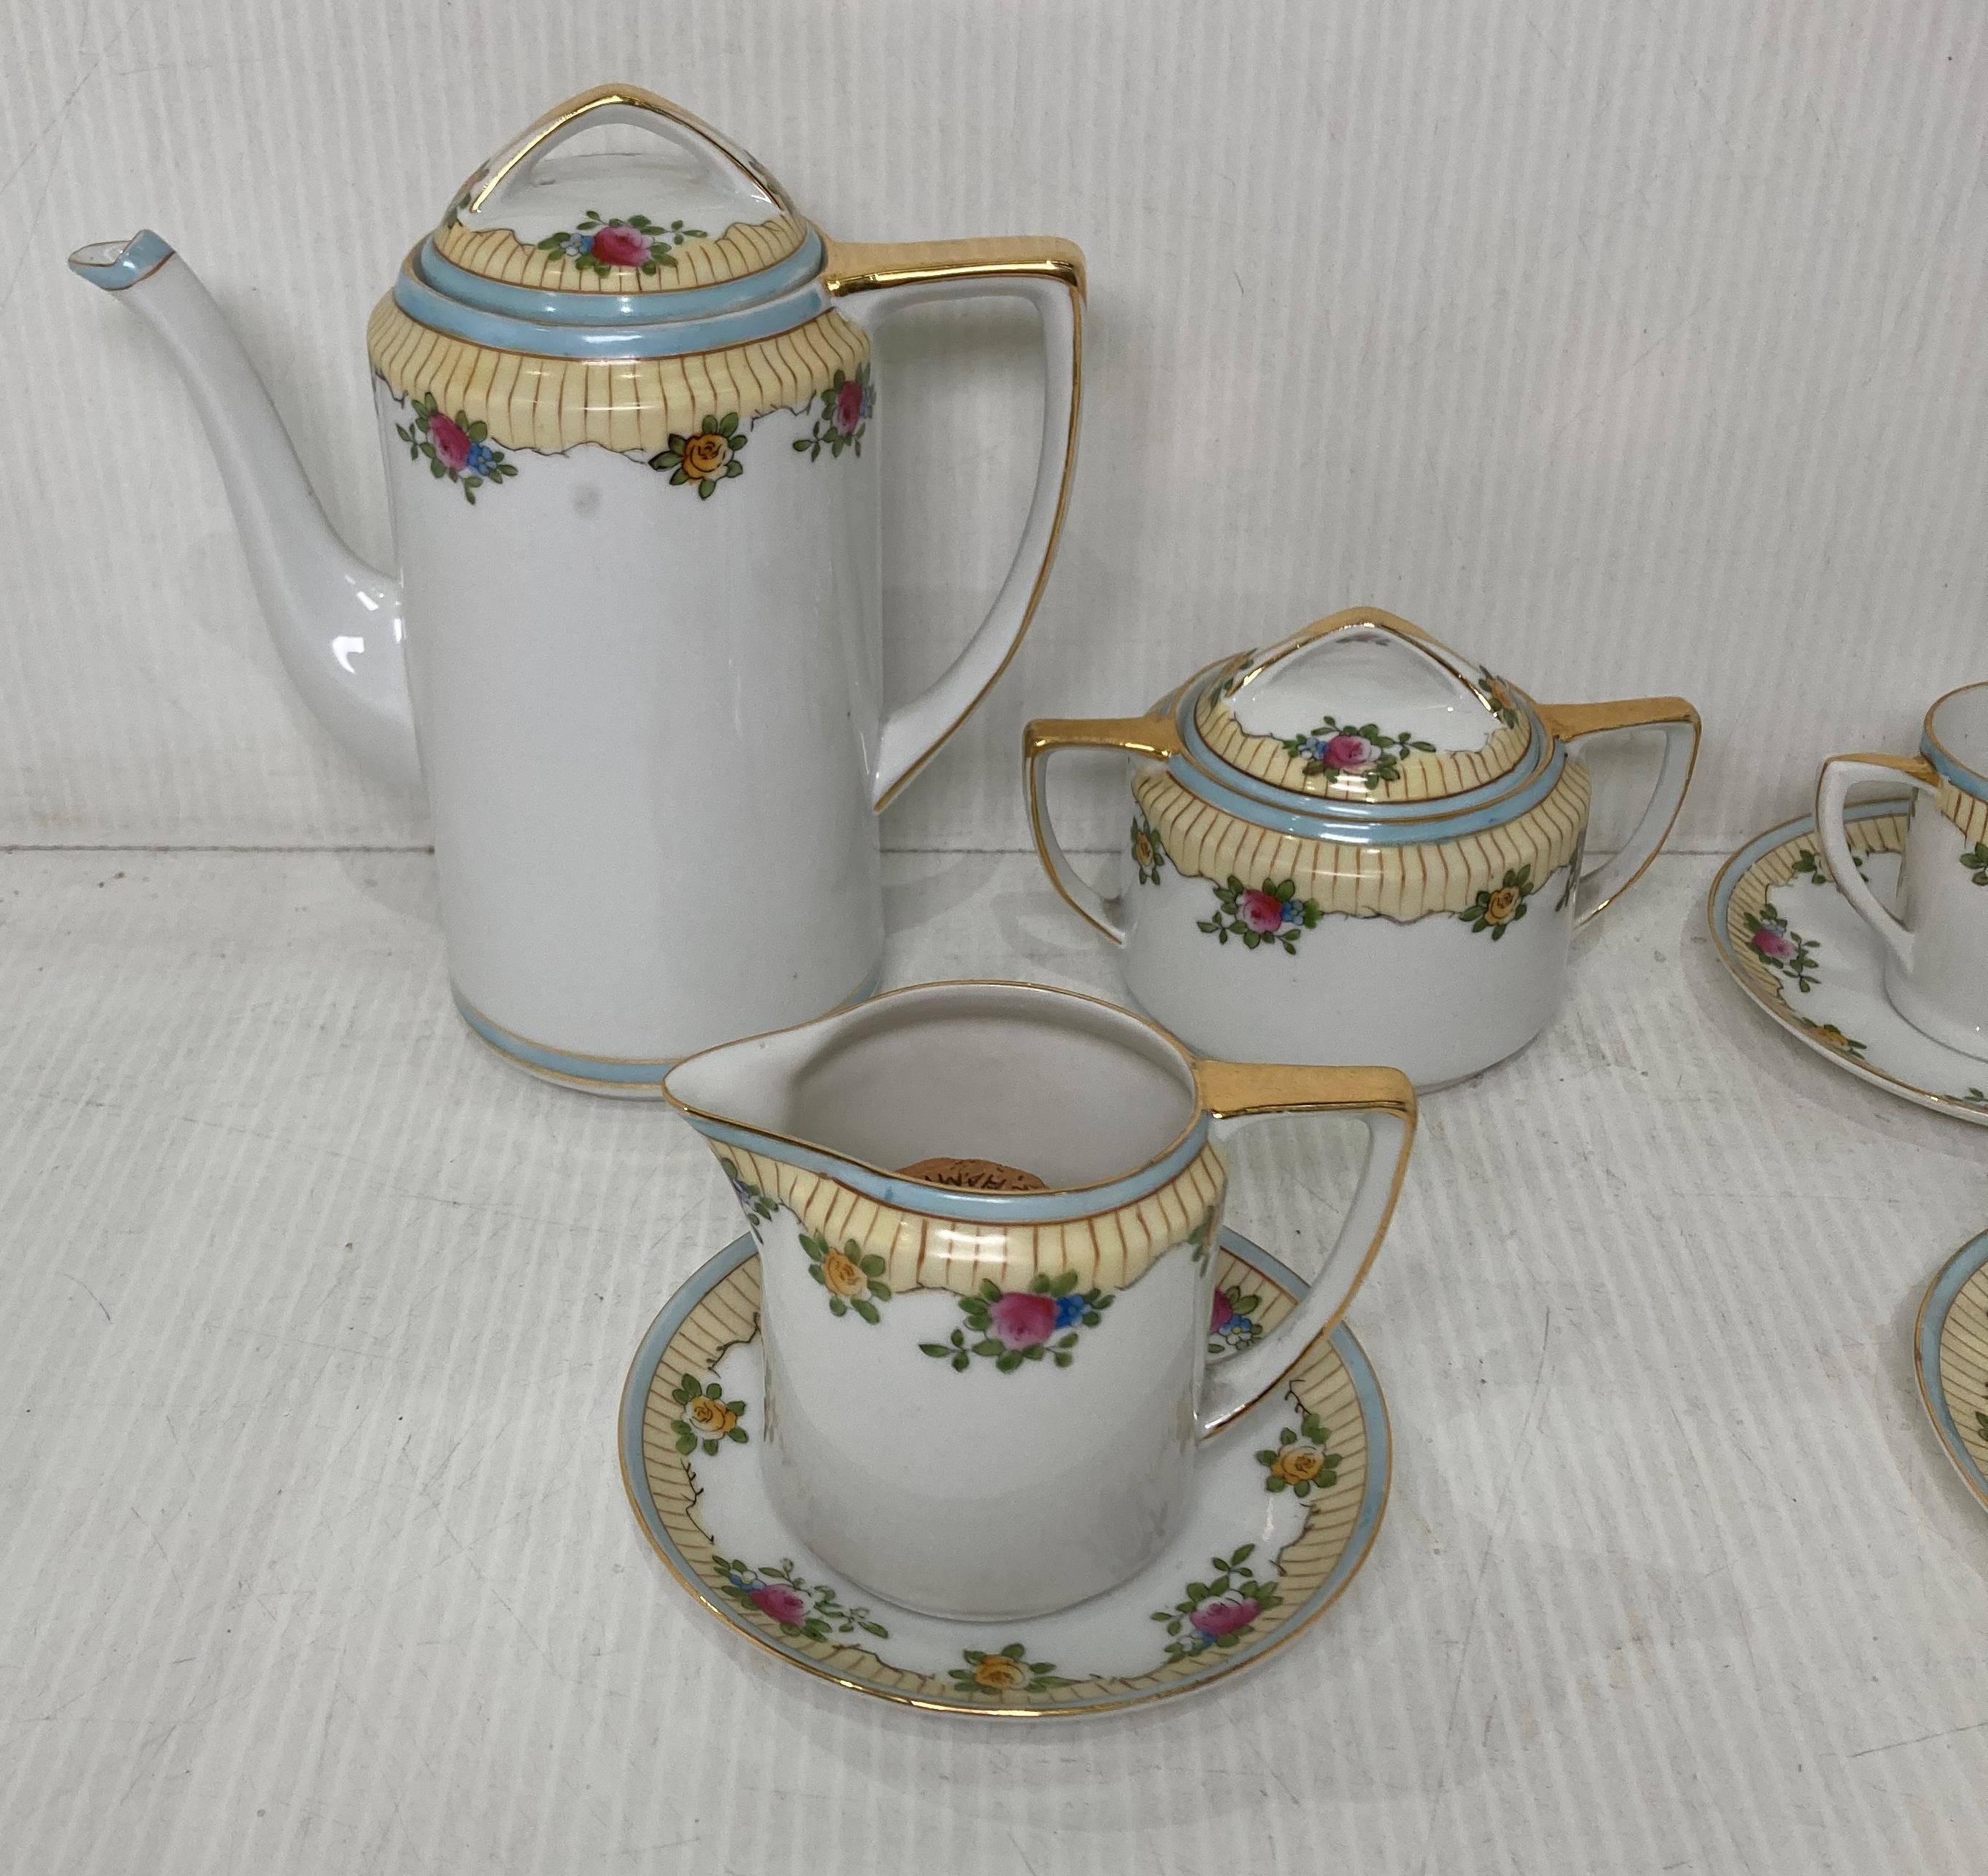 A vintage thirteen piece Noritake tea service including coffee pot, sugar bowl, cream jug, - Image 2 of 4